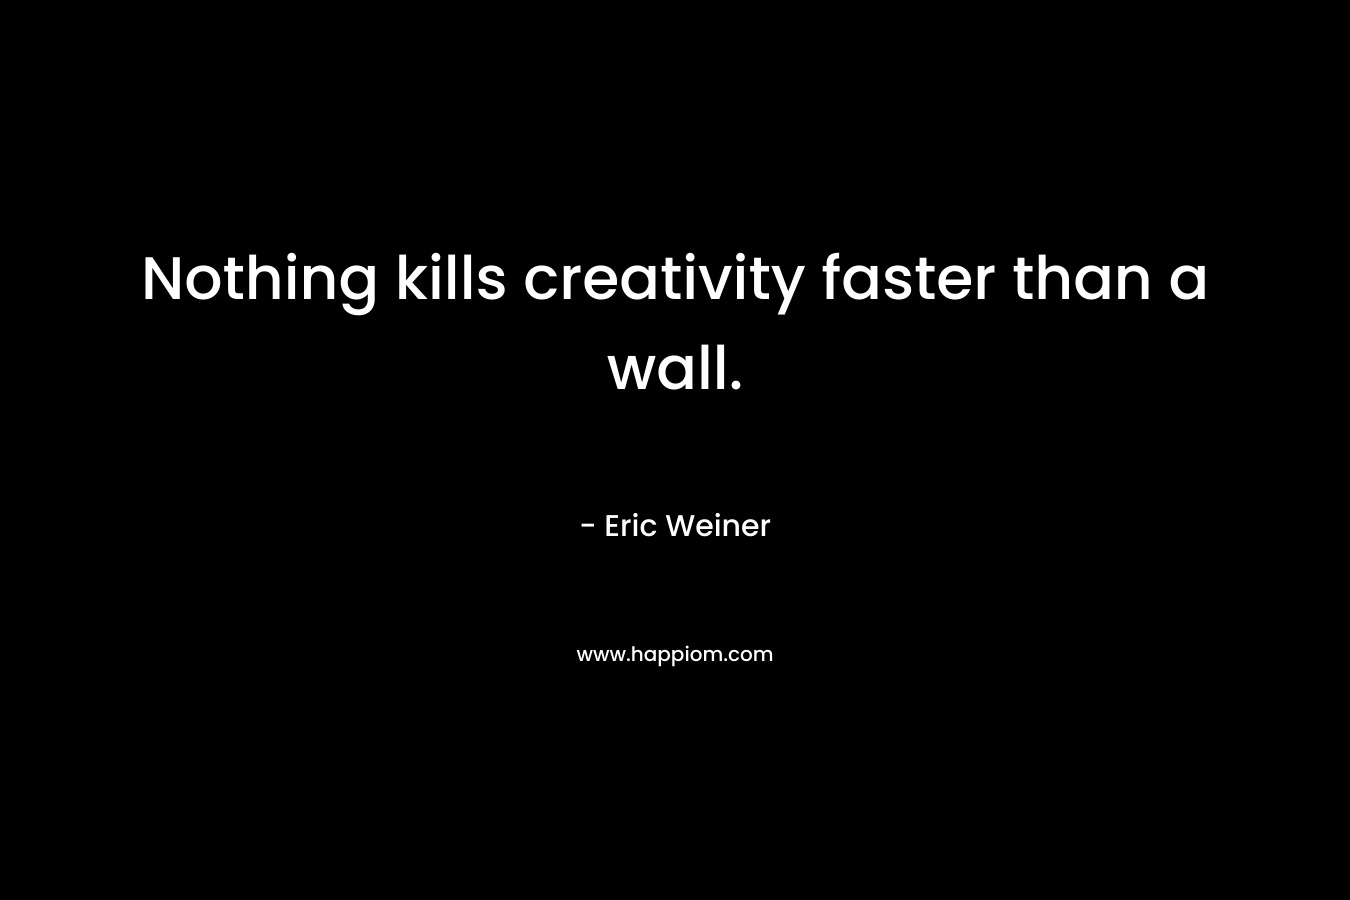 Nothing kills creativity faster than a wall.